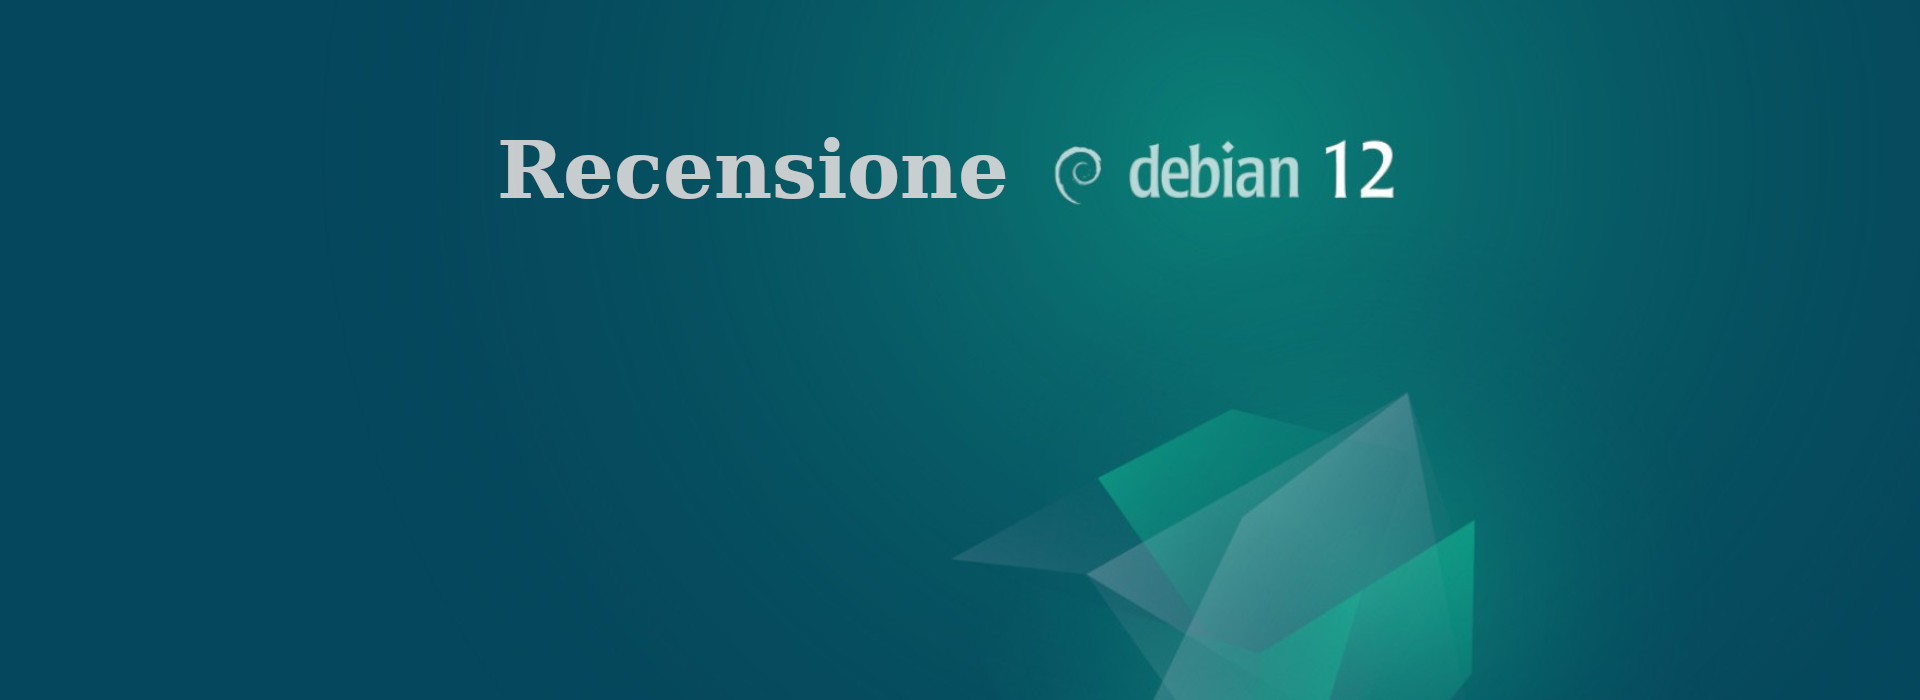 recensione Debian 12 (copertina)